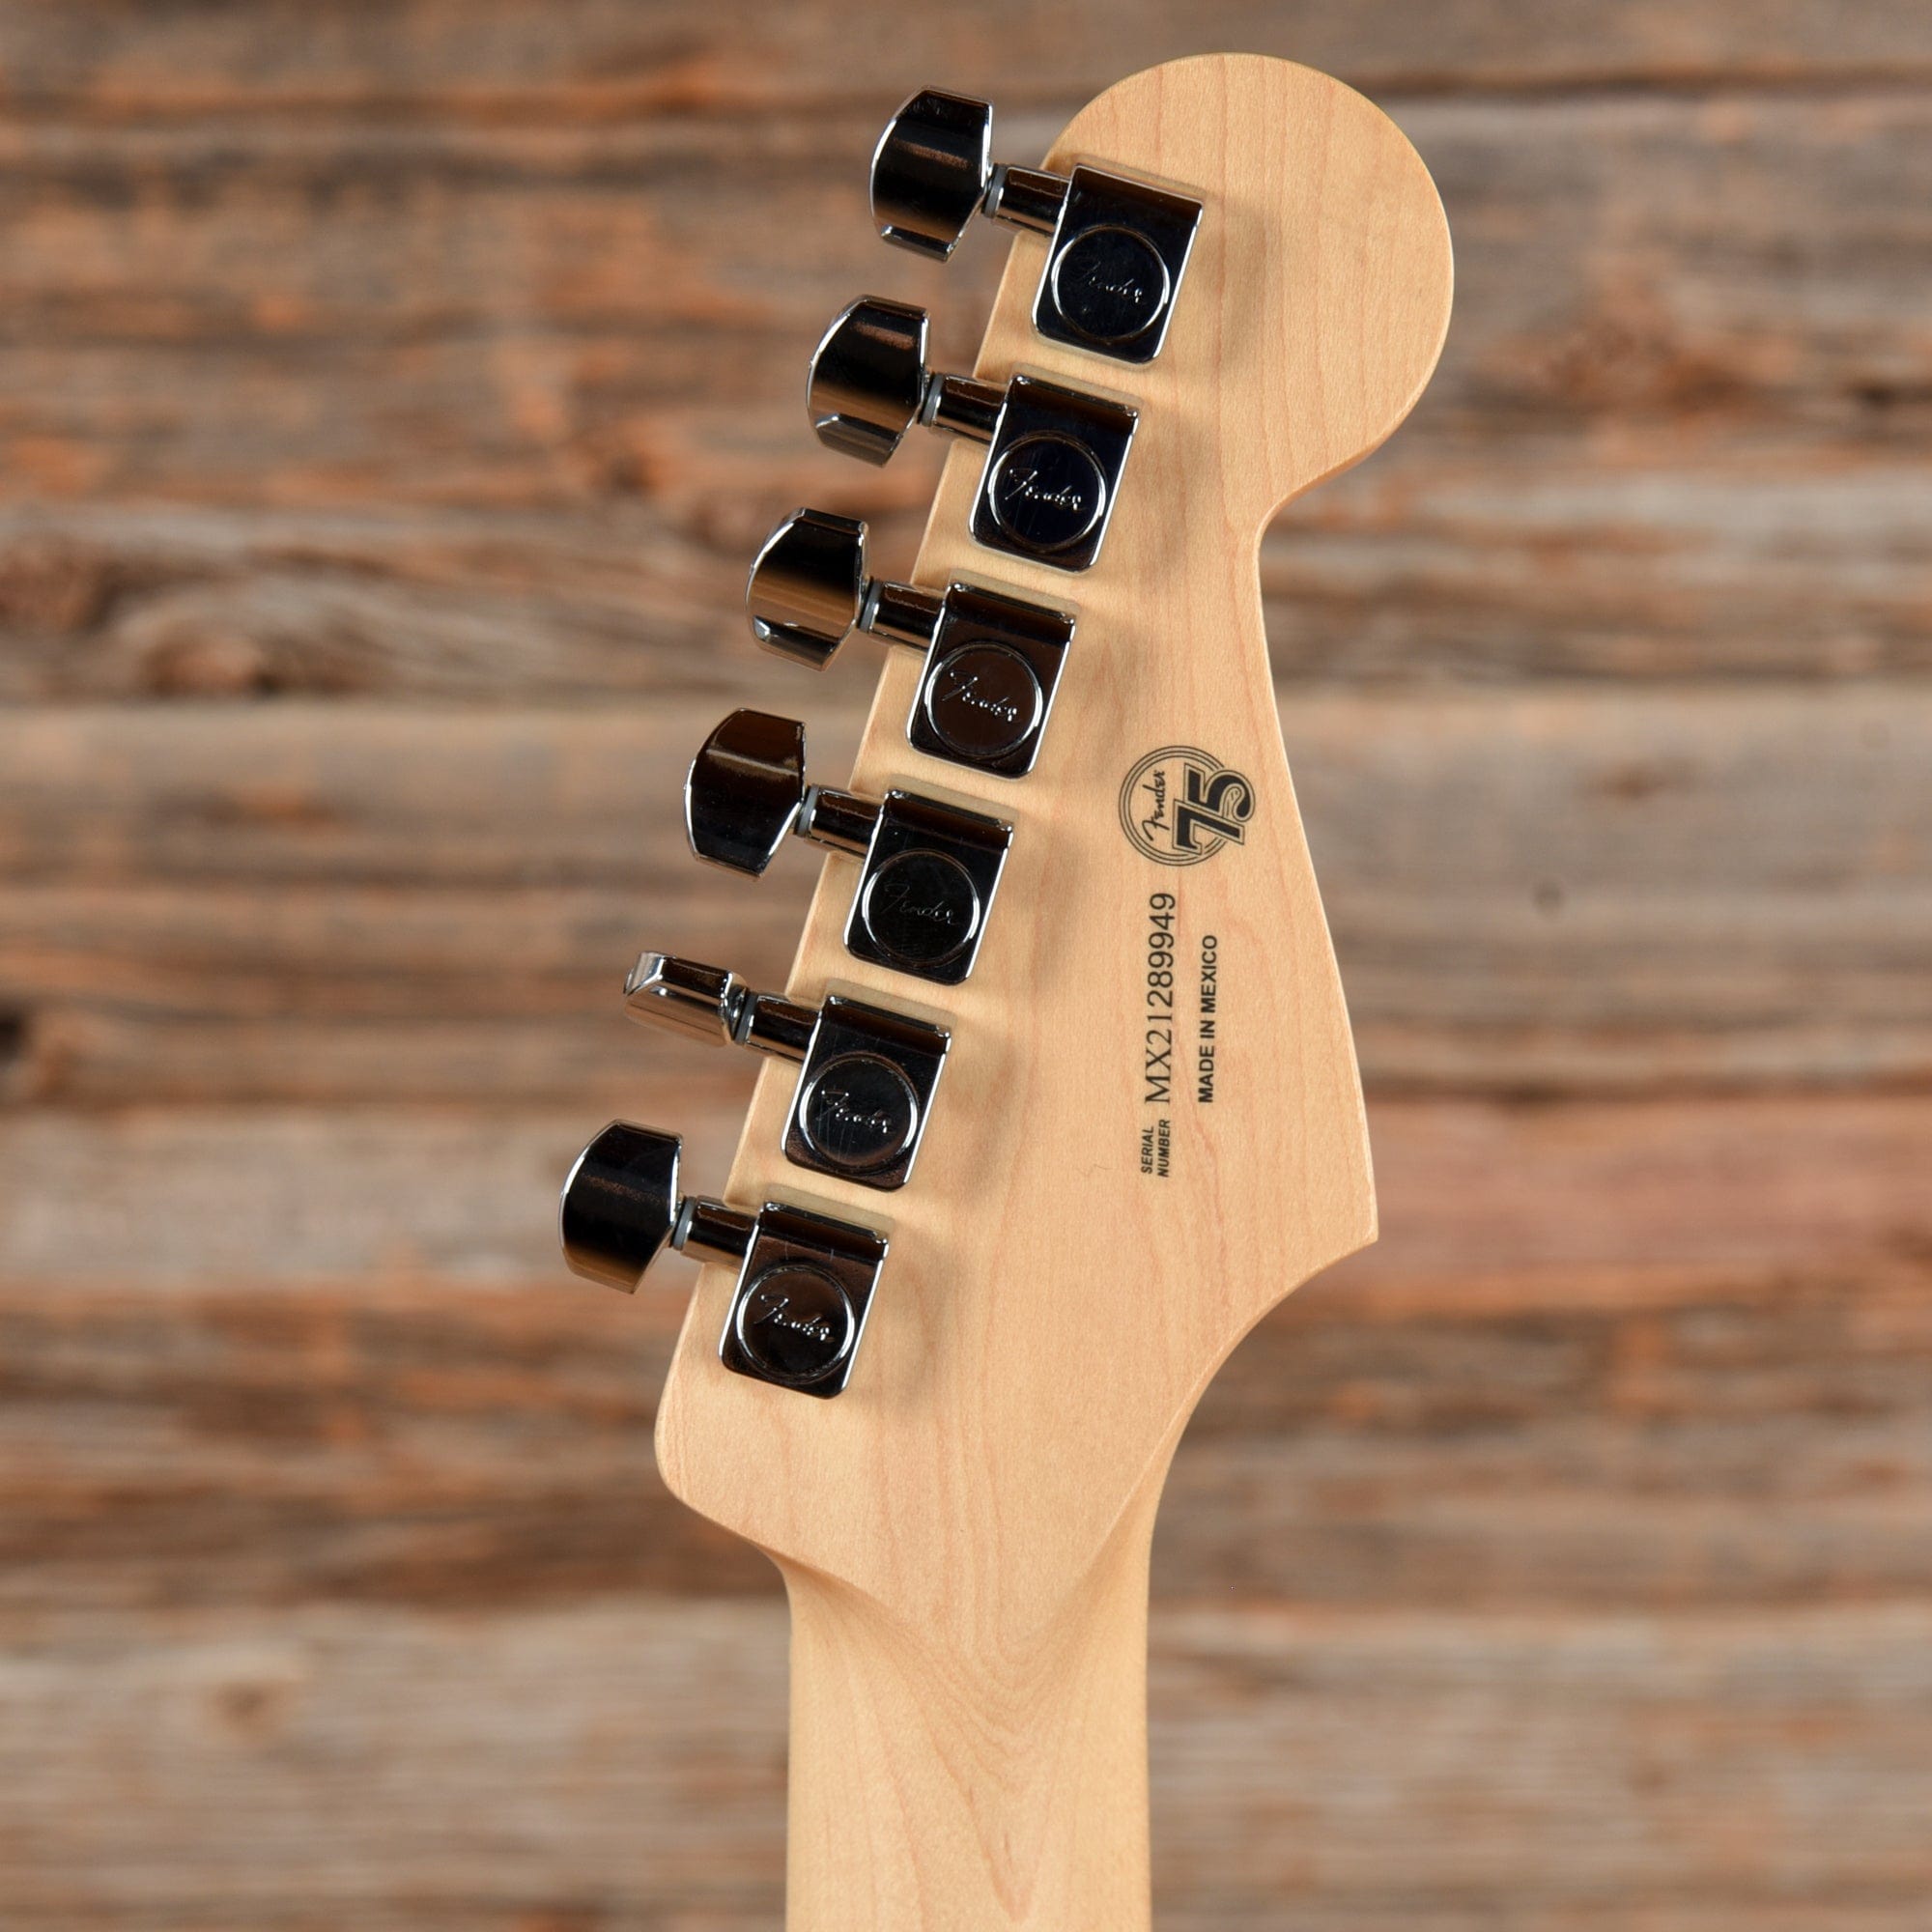 Fender Player Stratocaster Sunburst 2021 Electric Guitars / Solid Body